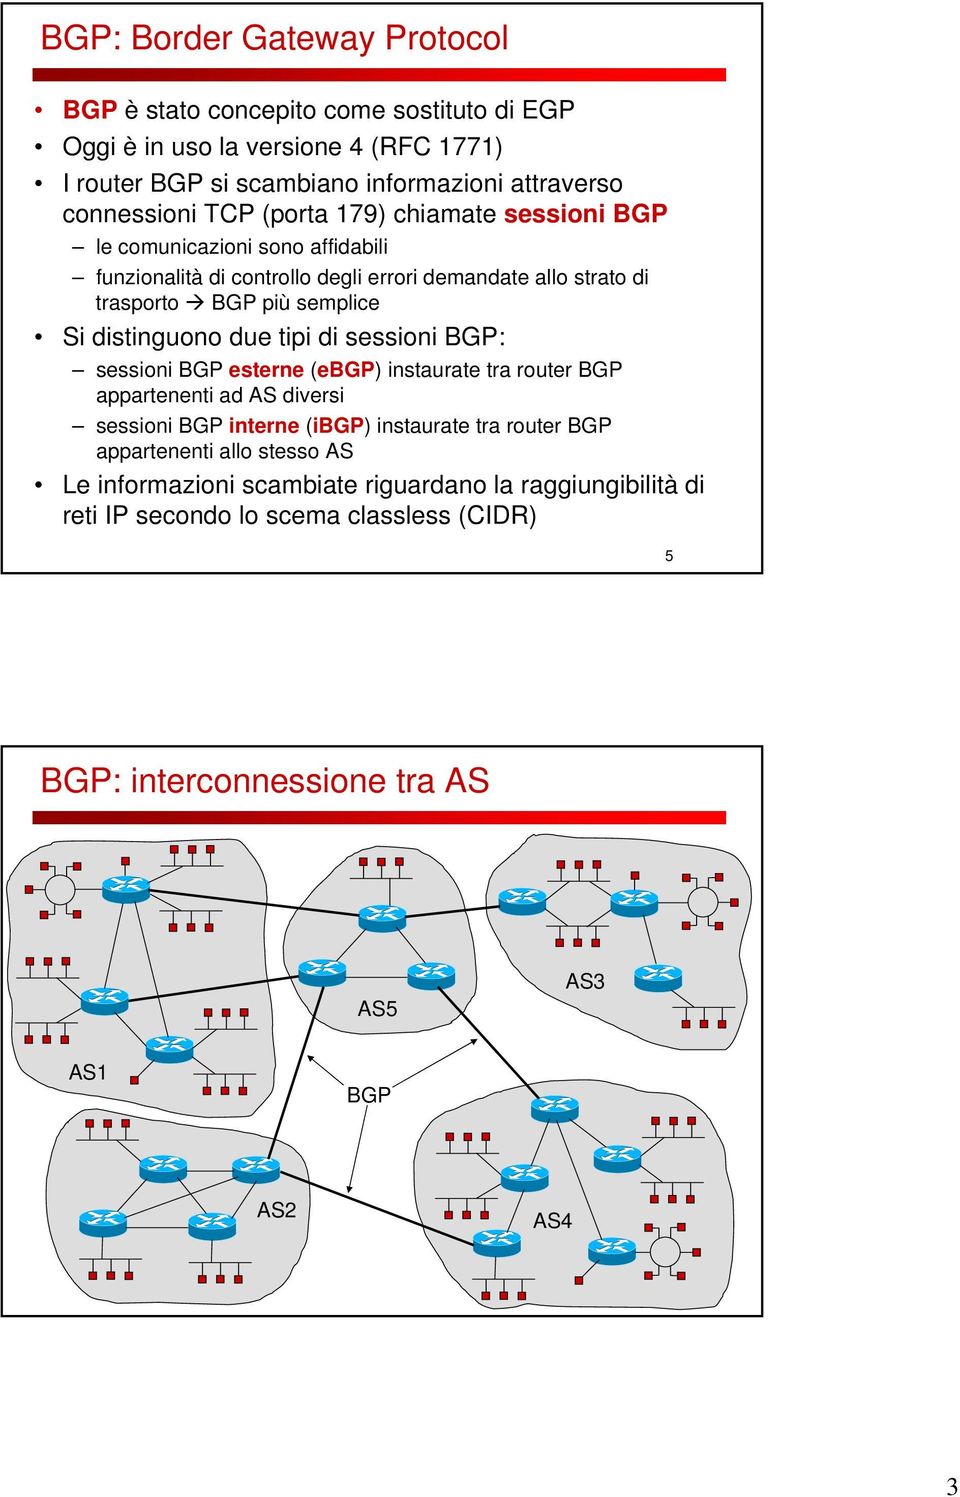 semplice Si distinguono due tipi di sessioni BGP: sessioni BGP esterne (ebgp) instaurate tra router BGP appartenenti ad AS diversi sessioni BGP interne (ibgp) instaurate